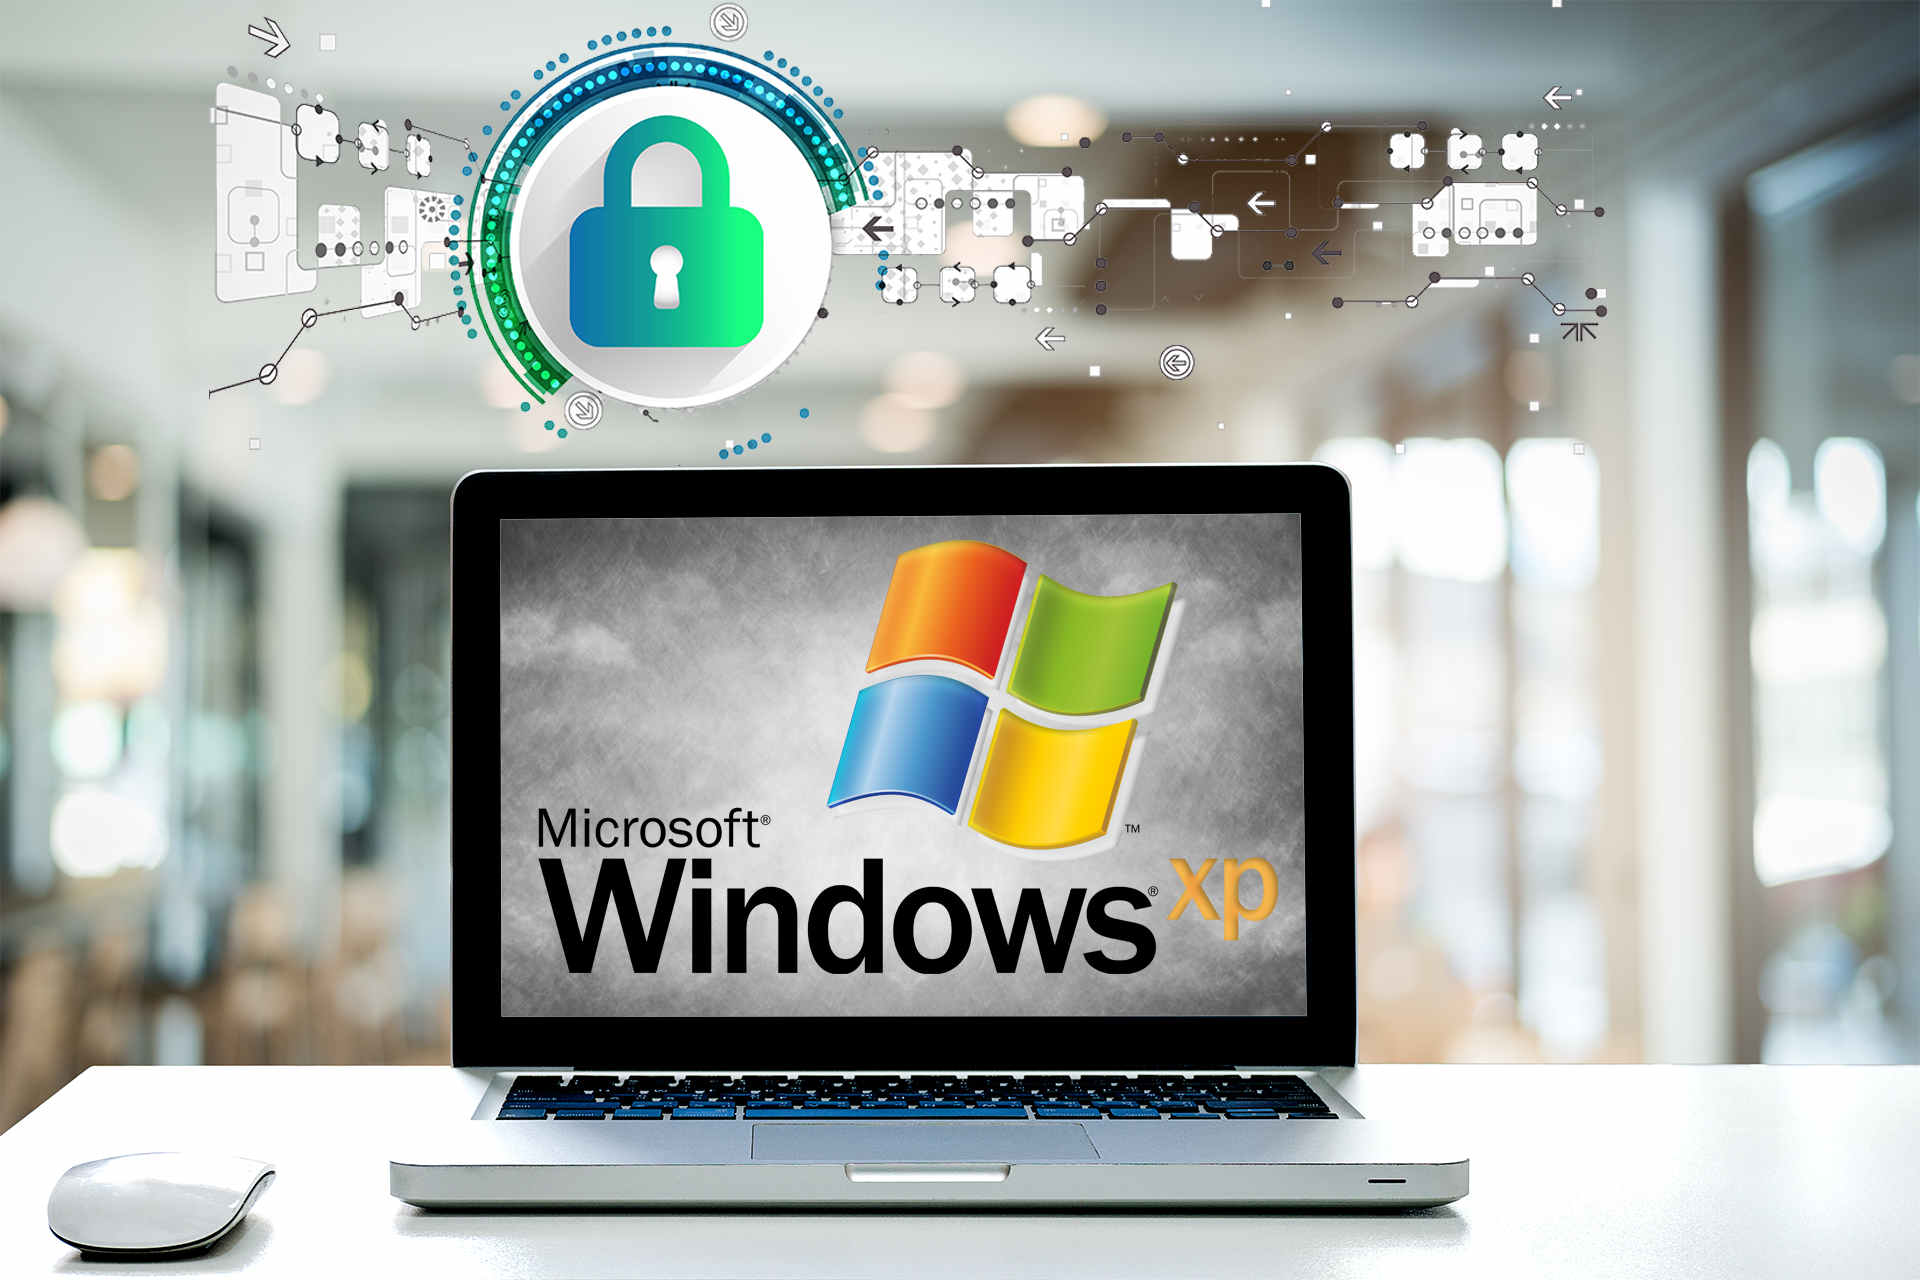 download free antivirus software for windows xp